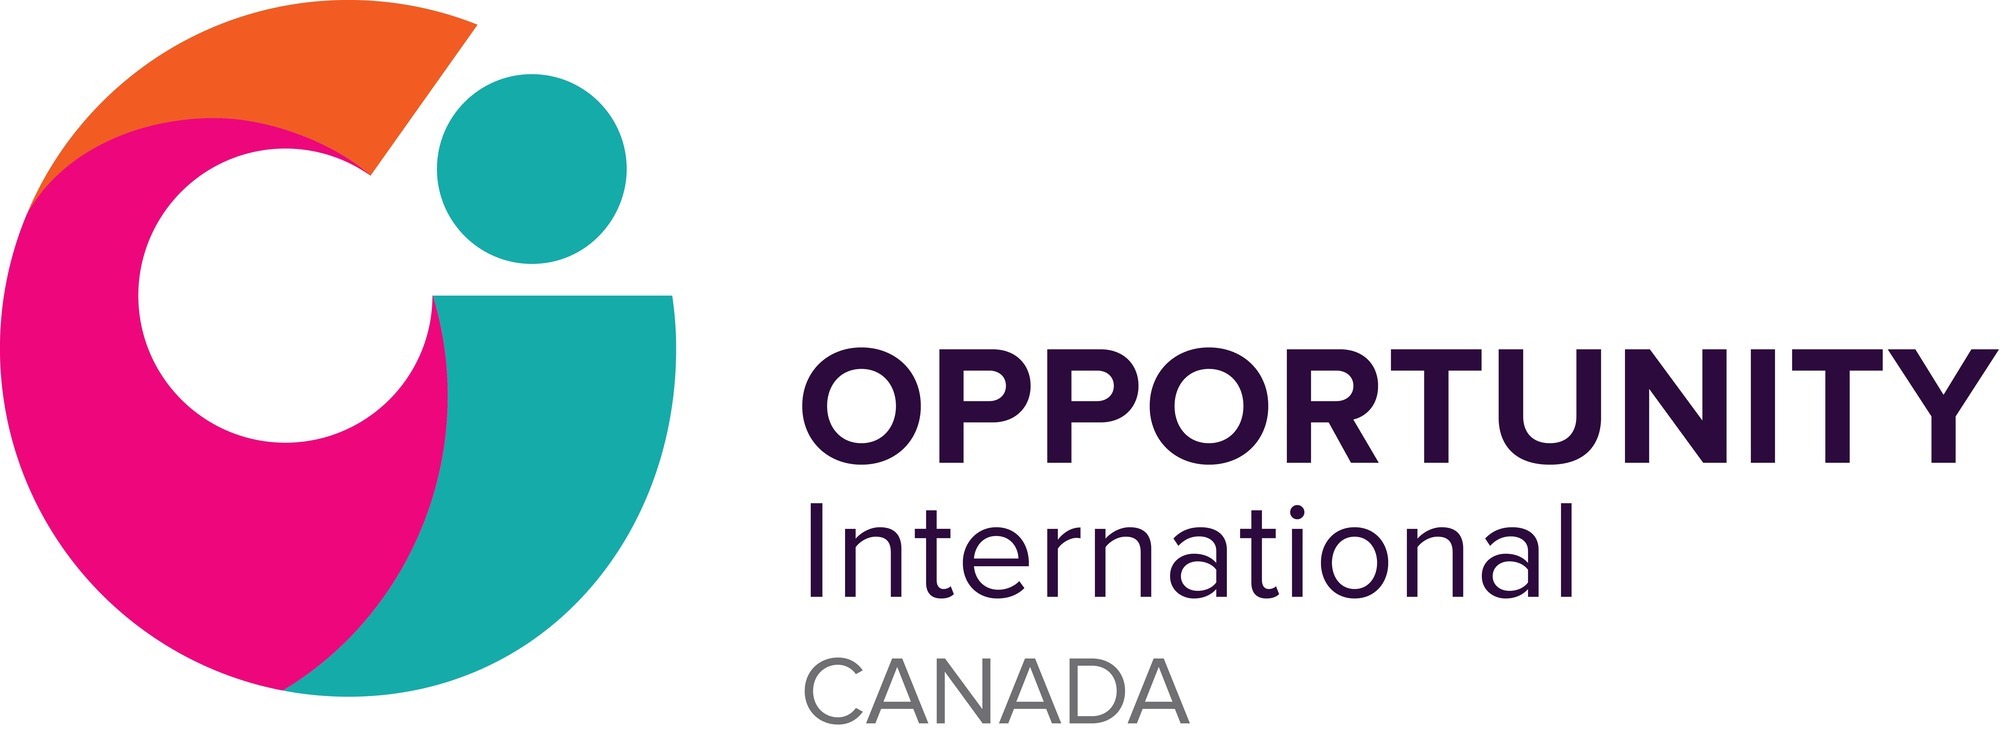 Opportunity International Canada logo